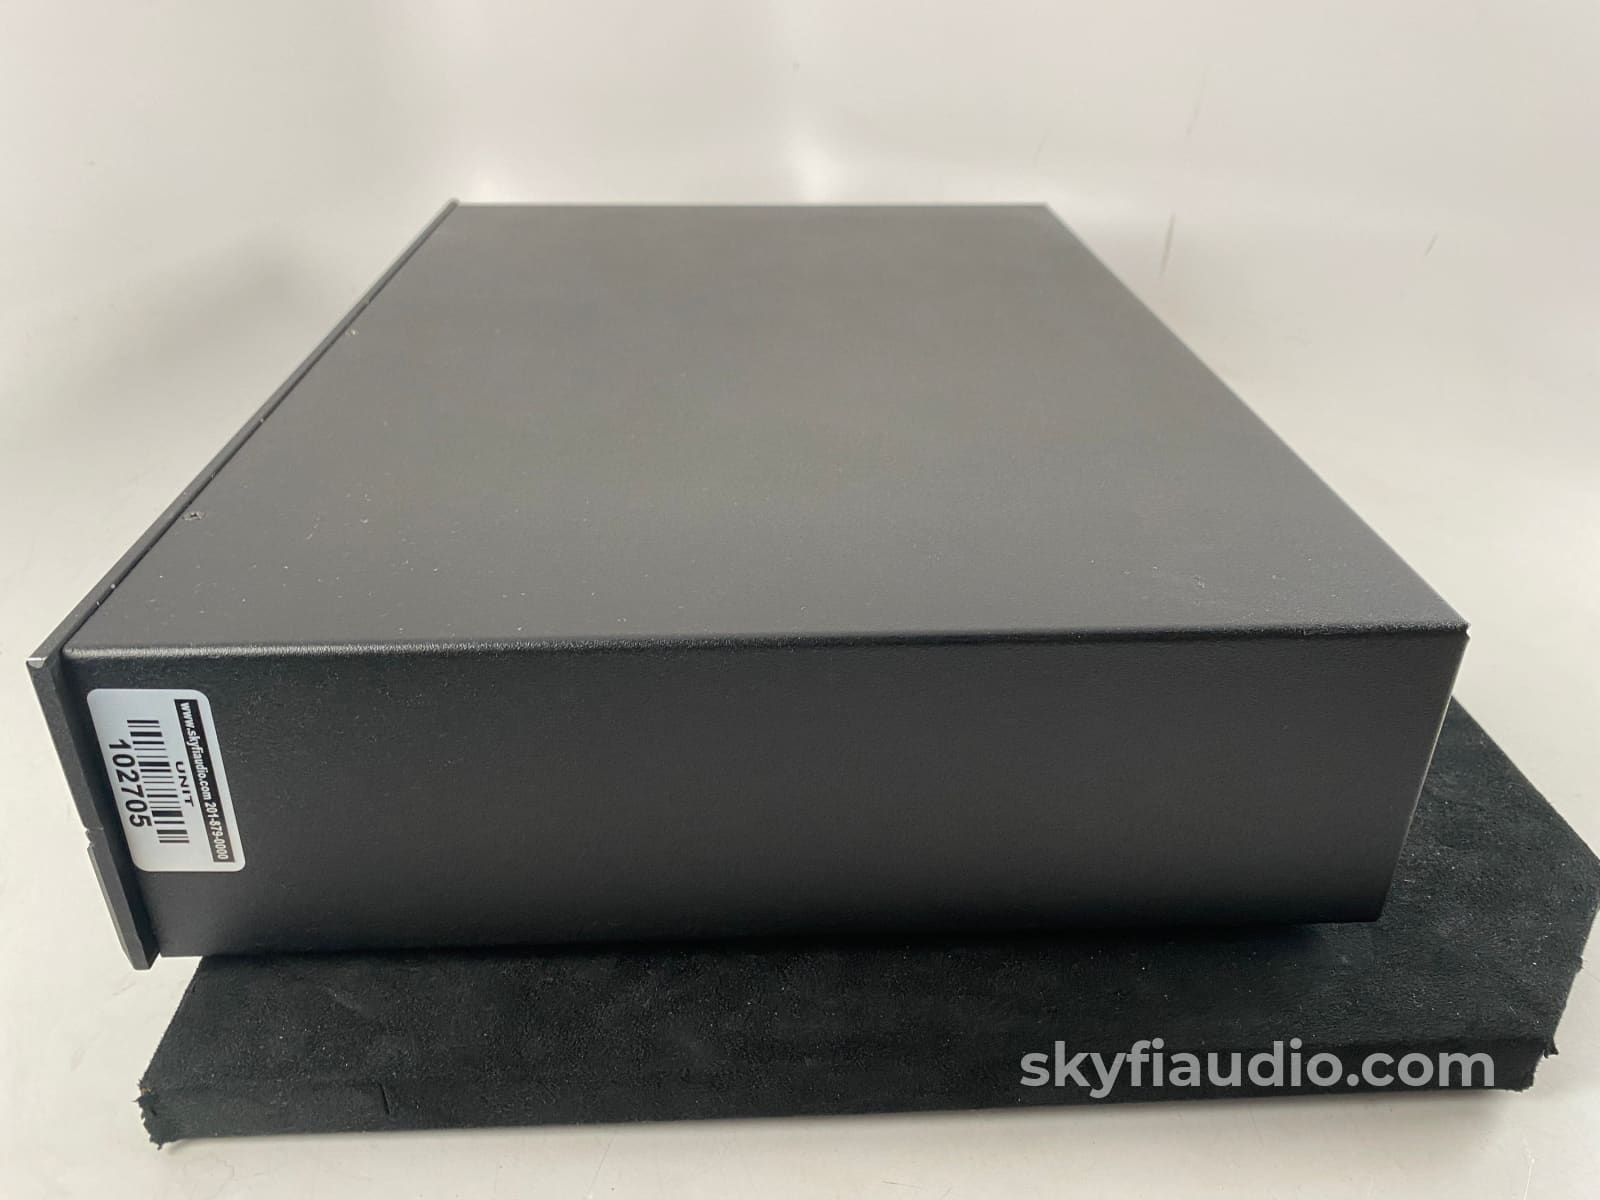 California Audio Labs Icon Mkii Cd Player Skyfi Best Seller Complete Set + Digital